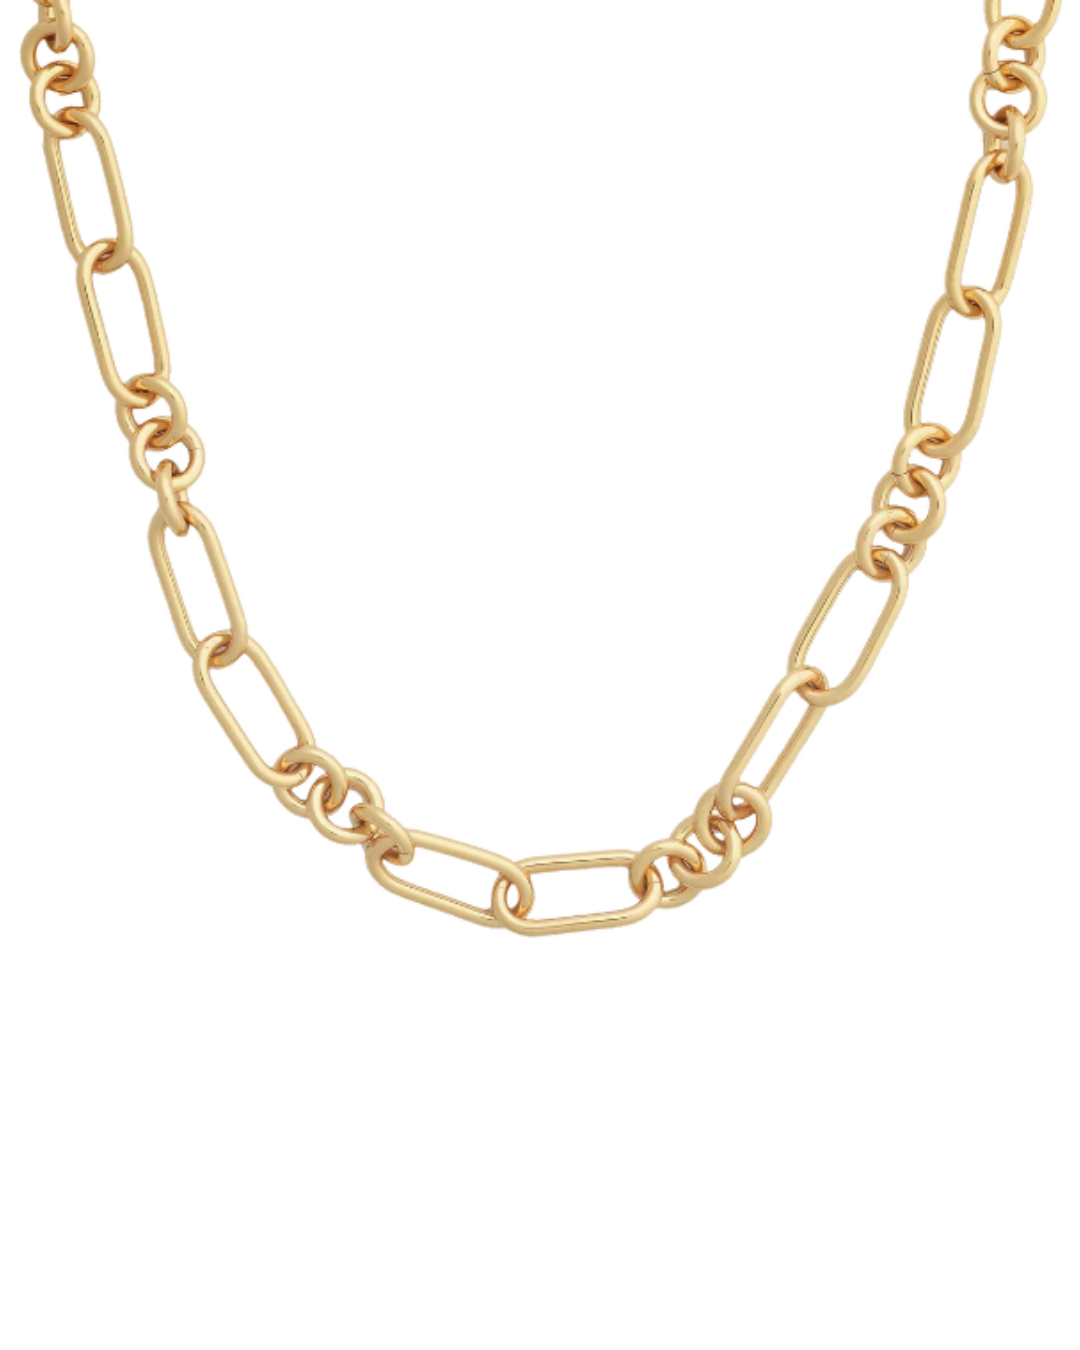 Charm Link Necklace Jewellery by YCL Jewels - Prae Wellness